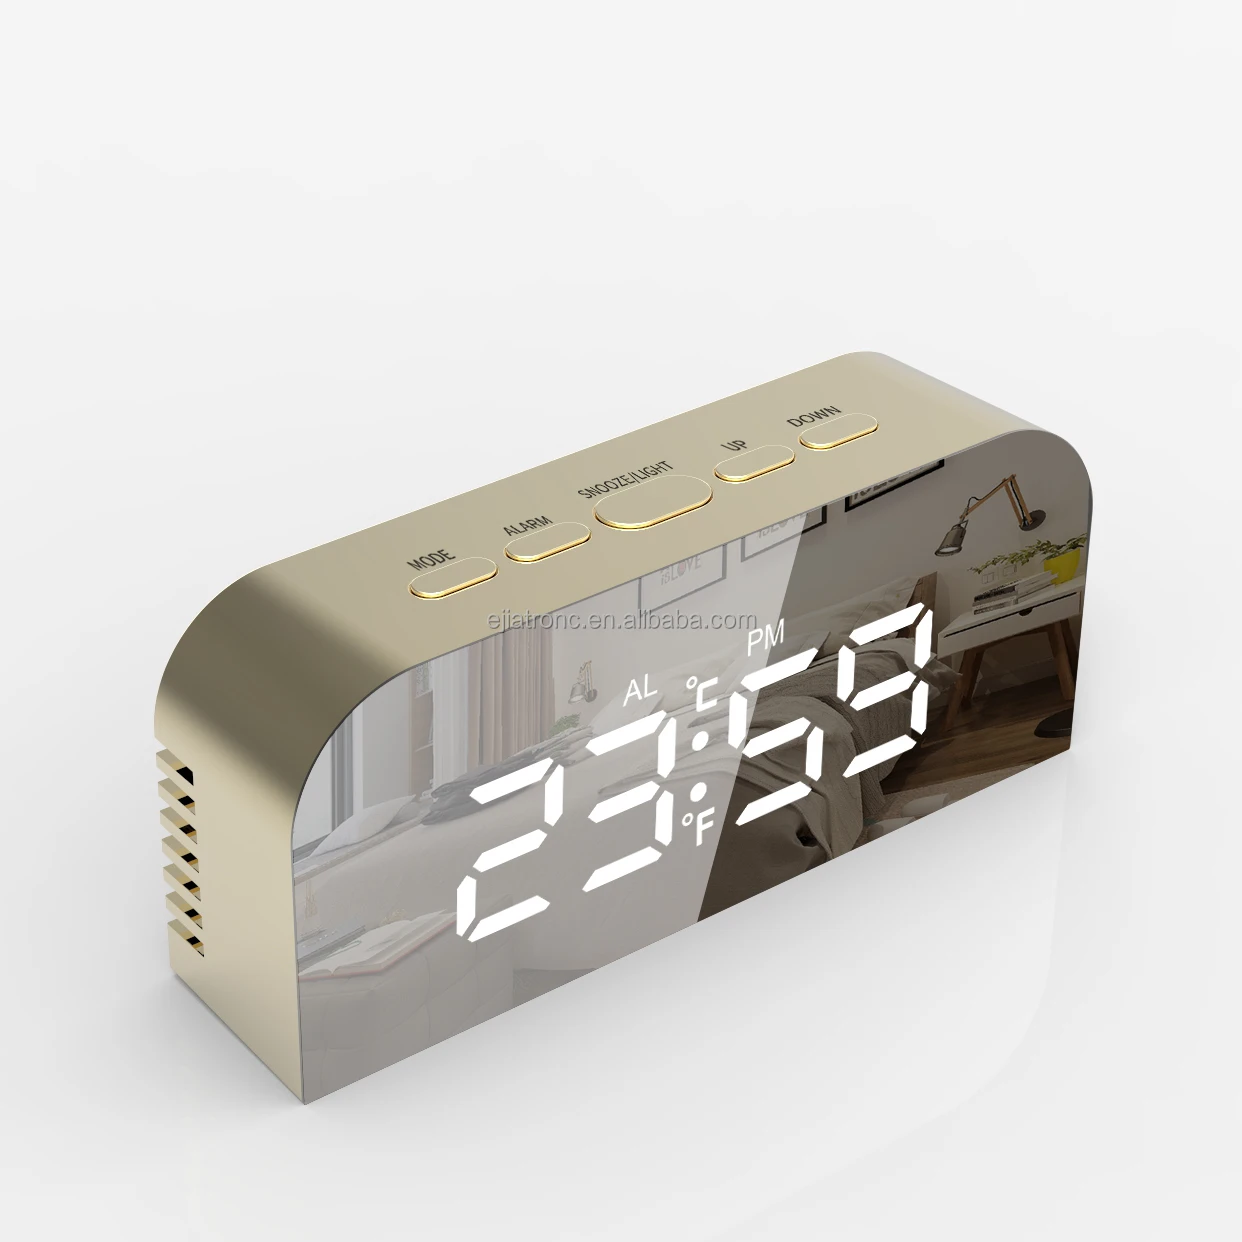 

Modern LED Mirror Desk Clock Large Display Gold Digital Alarm Clock with Dual USB Charger Ports,2 Levels Brightness